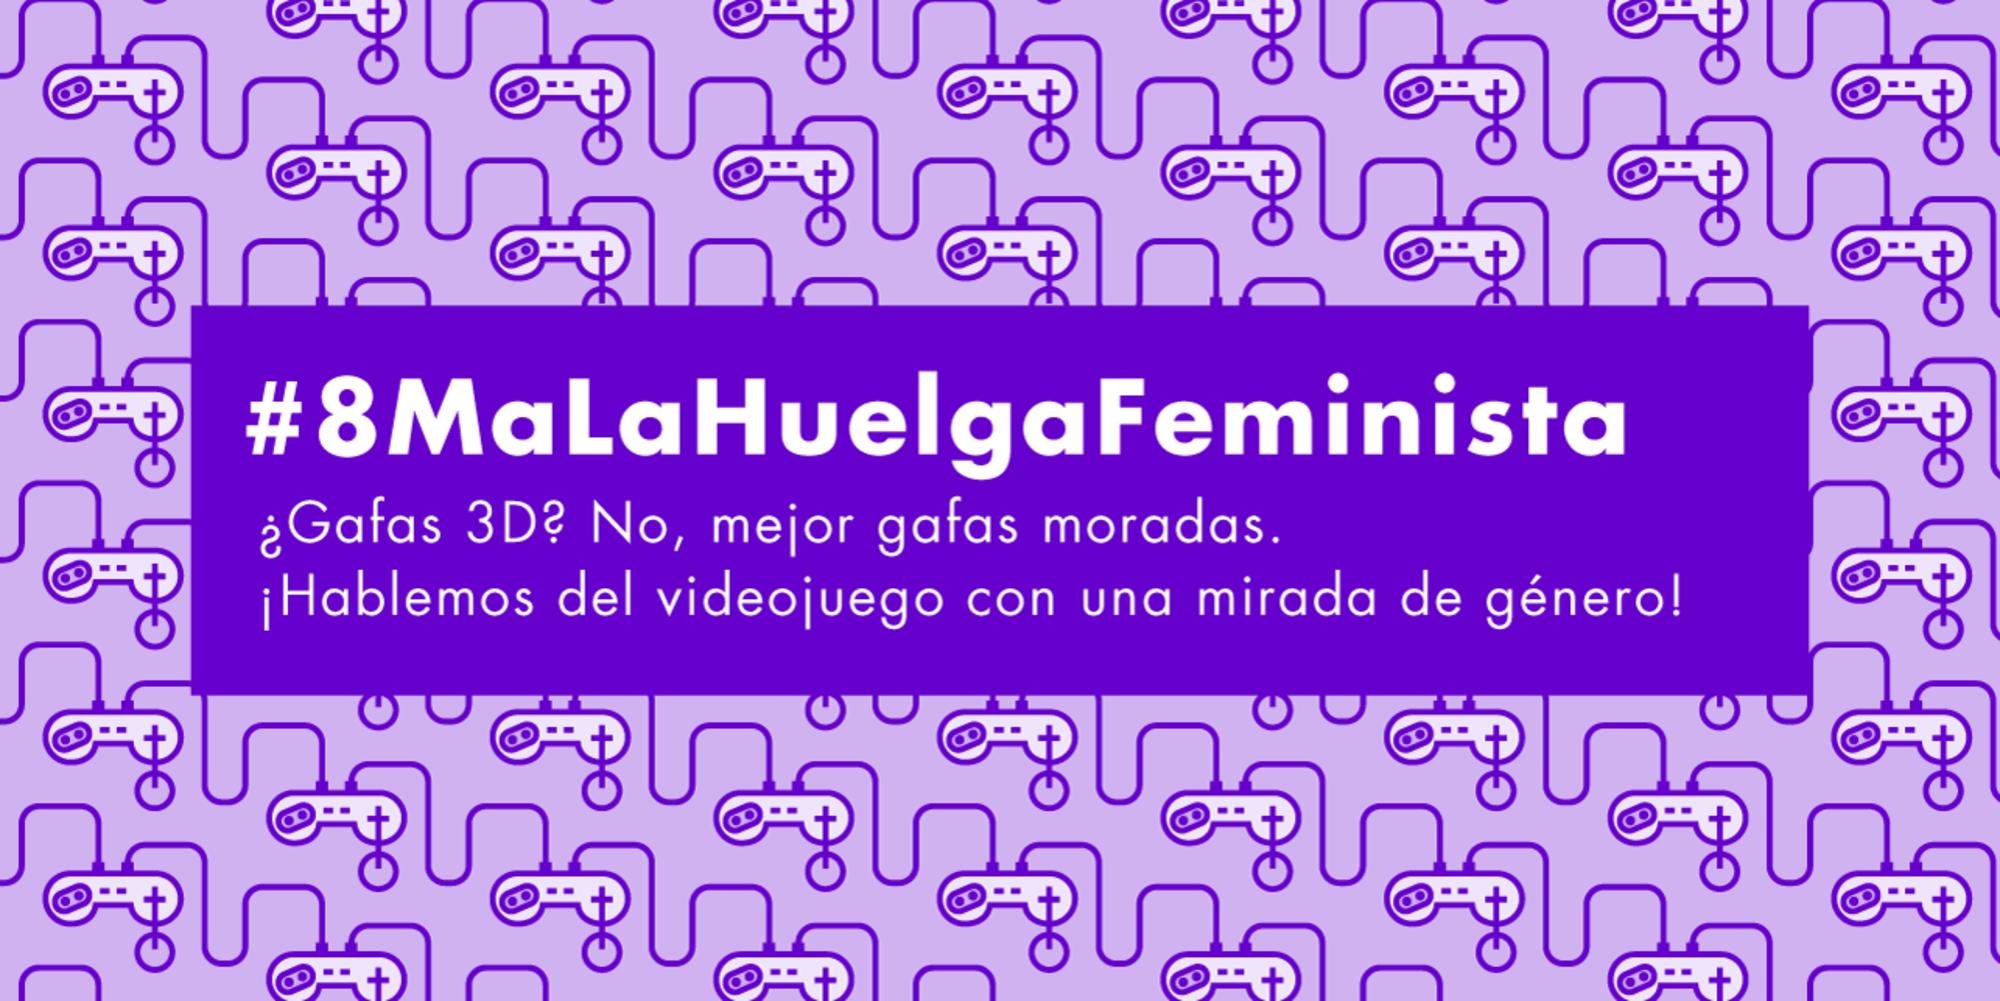 #8MaLaHuelgaFeminista. Videojuegos con perspectiva de género.